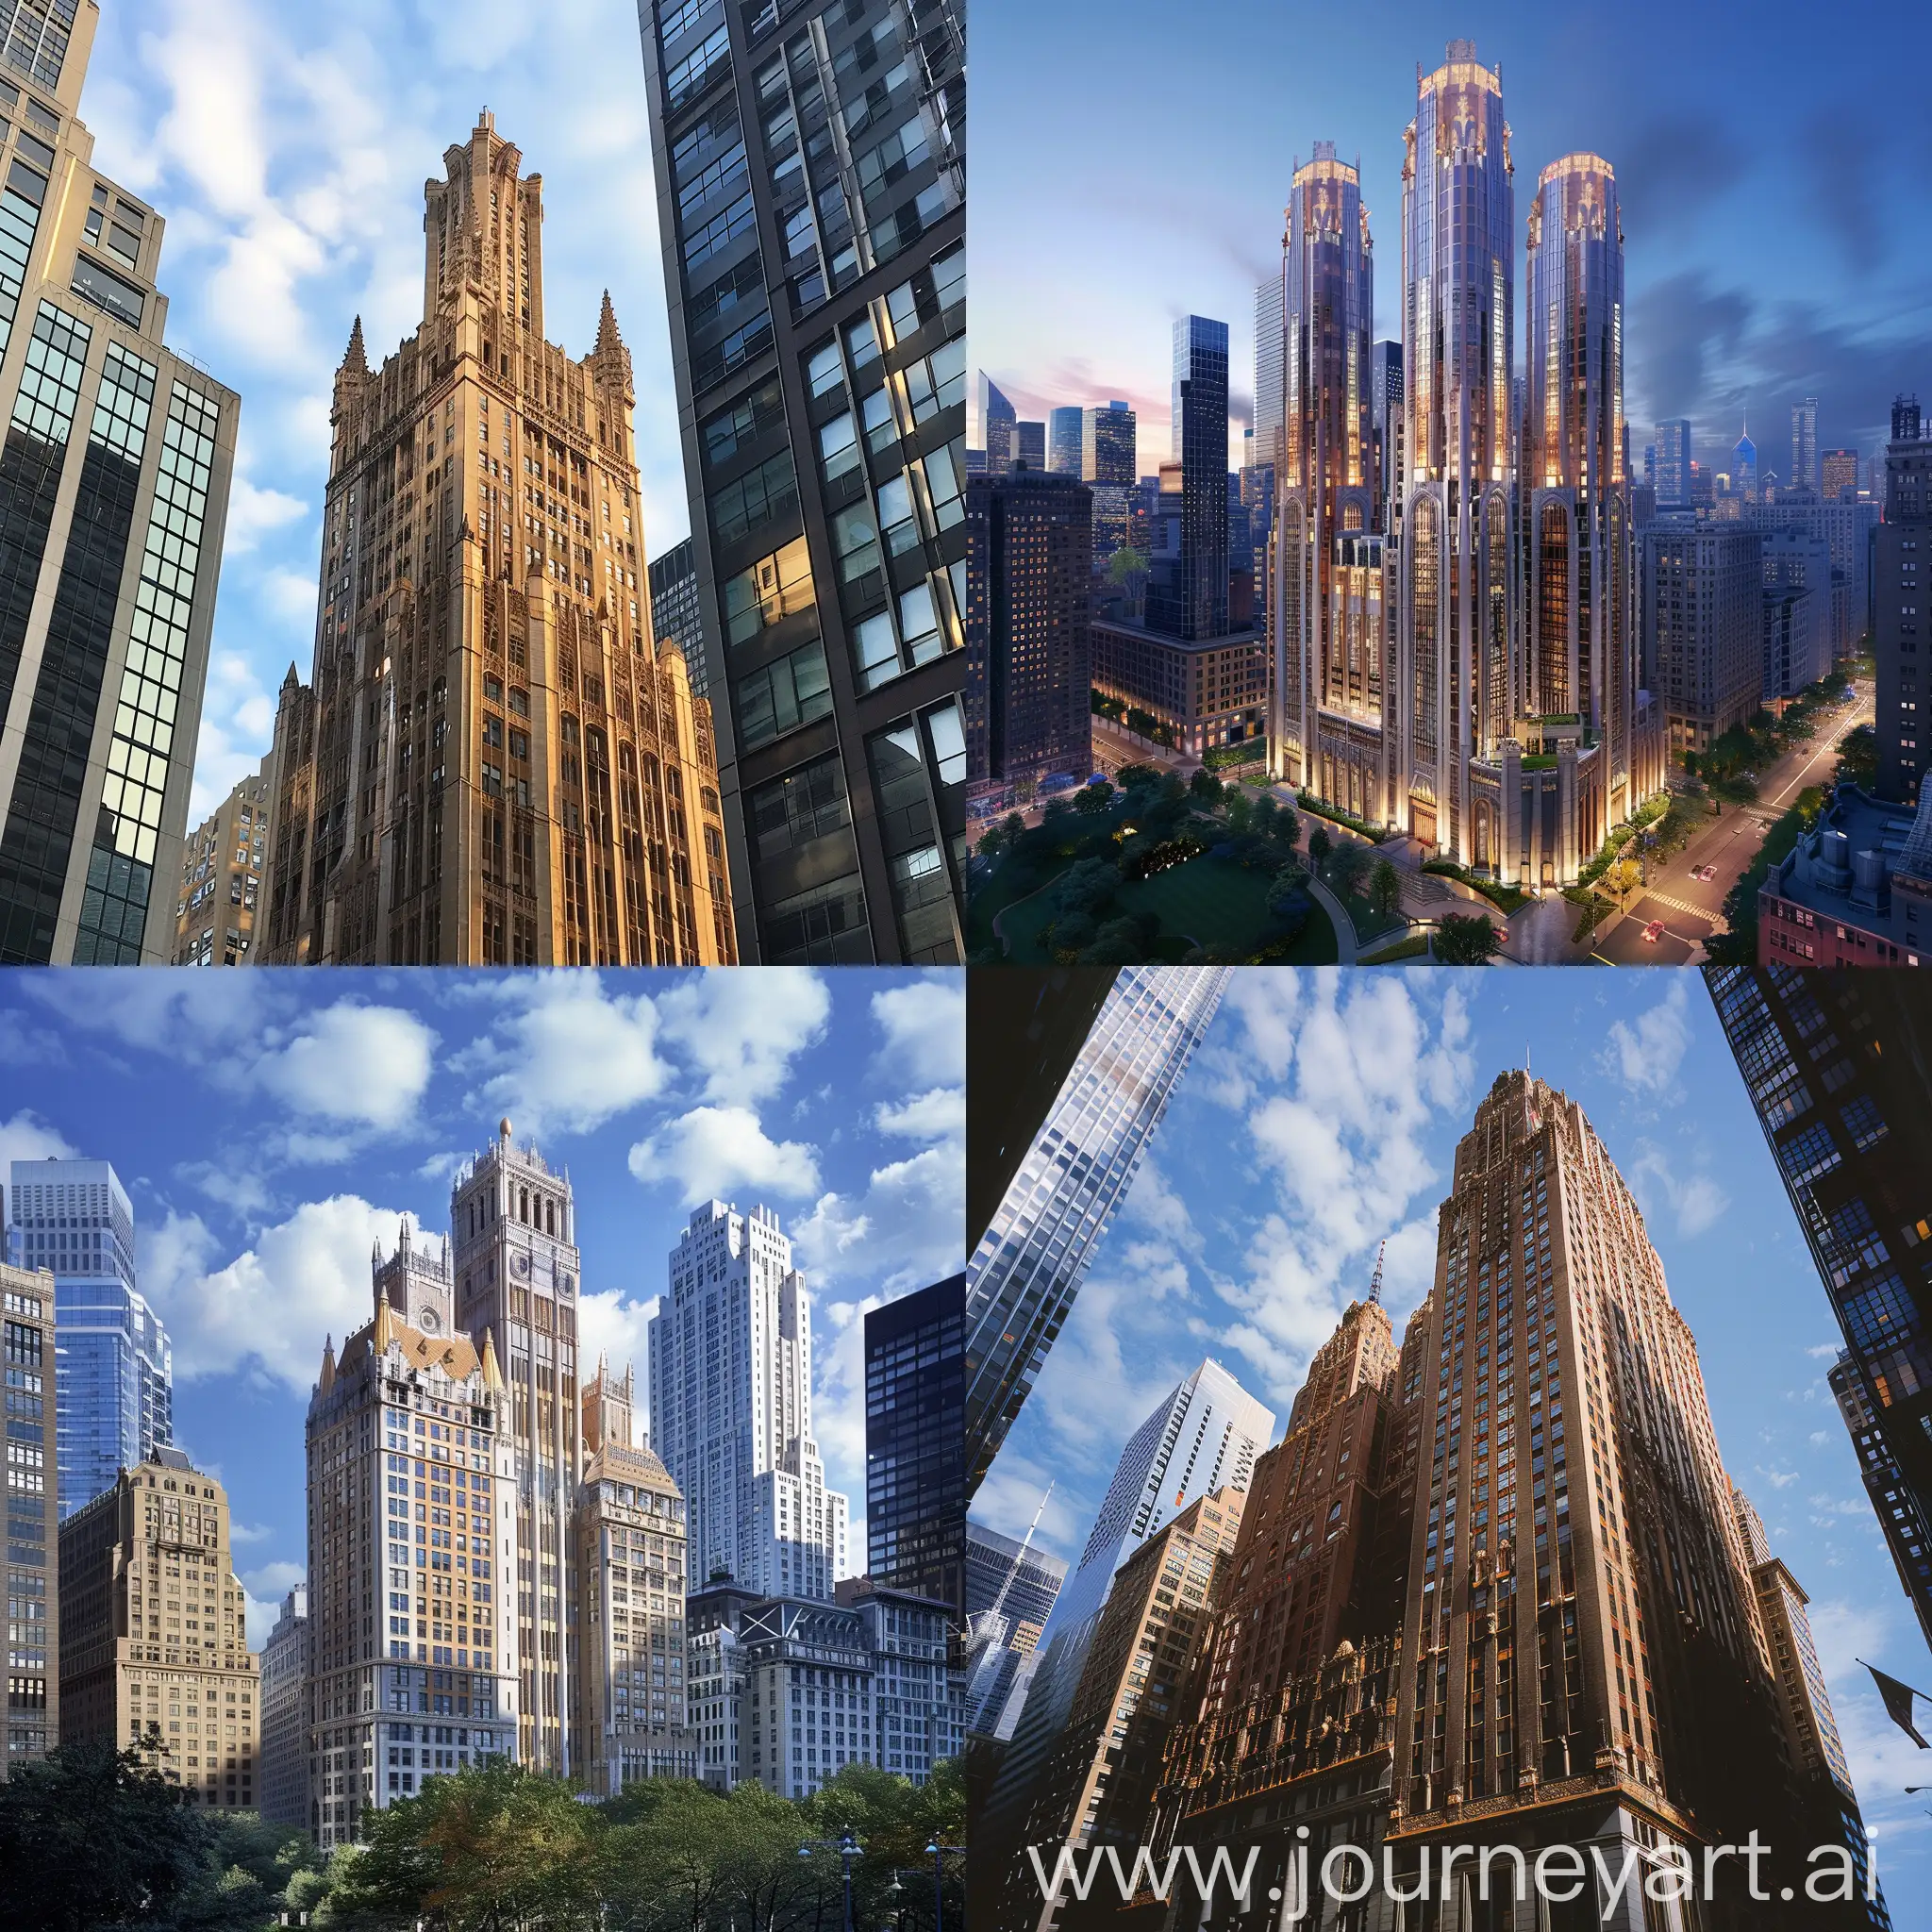 Urban-Elegance-Skyscrapers-in-Renaissance-Revival-Splendor